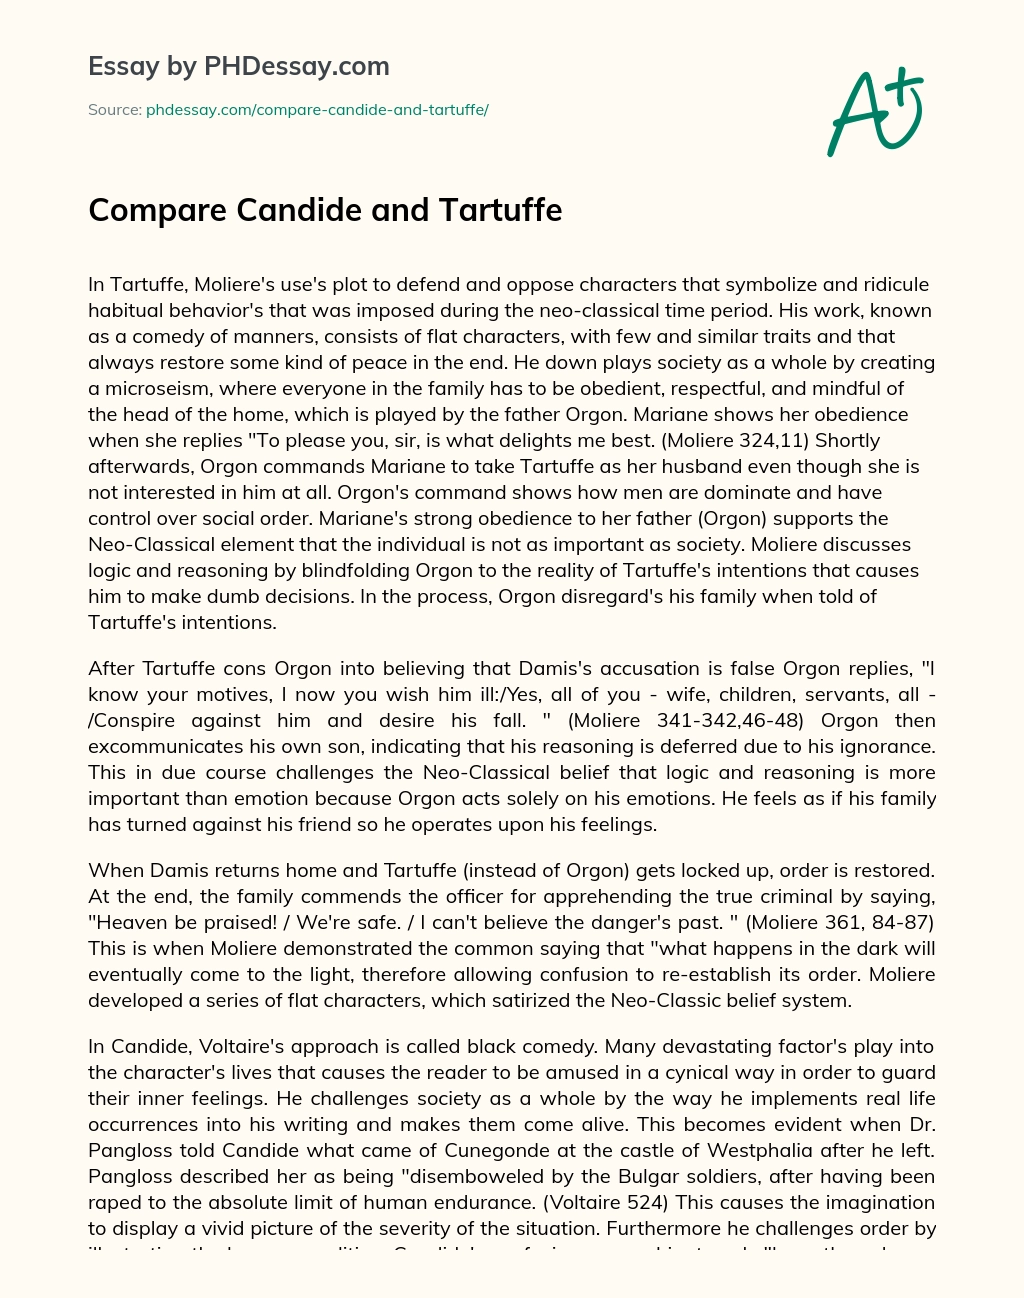 Compare Candide and Tartuffe essay